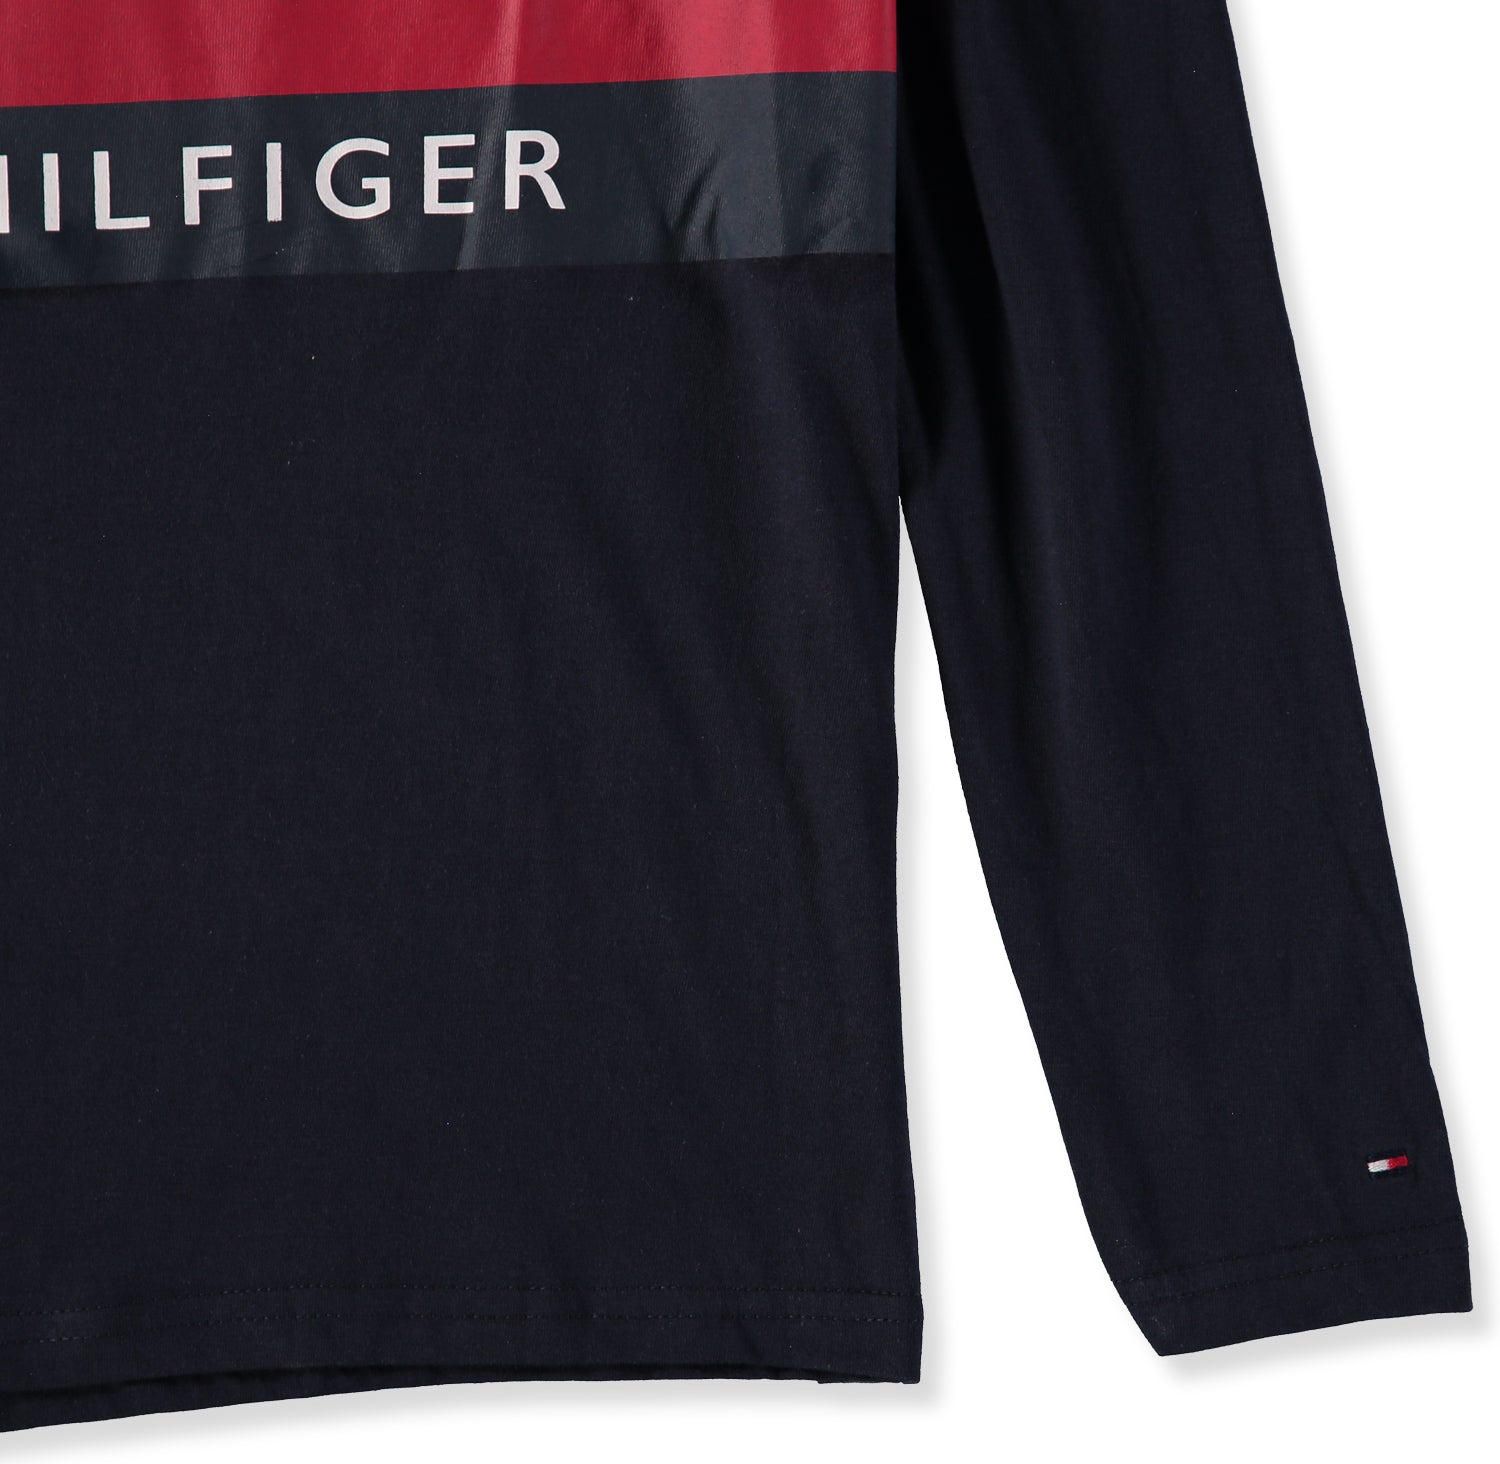 Tommy Hilfiger Boys 8-20 Long Sleeve Classic Logo T-Shirt